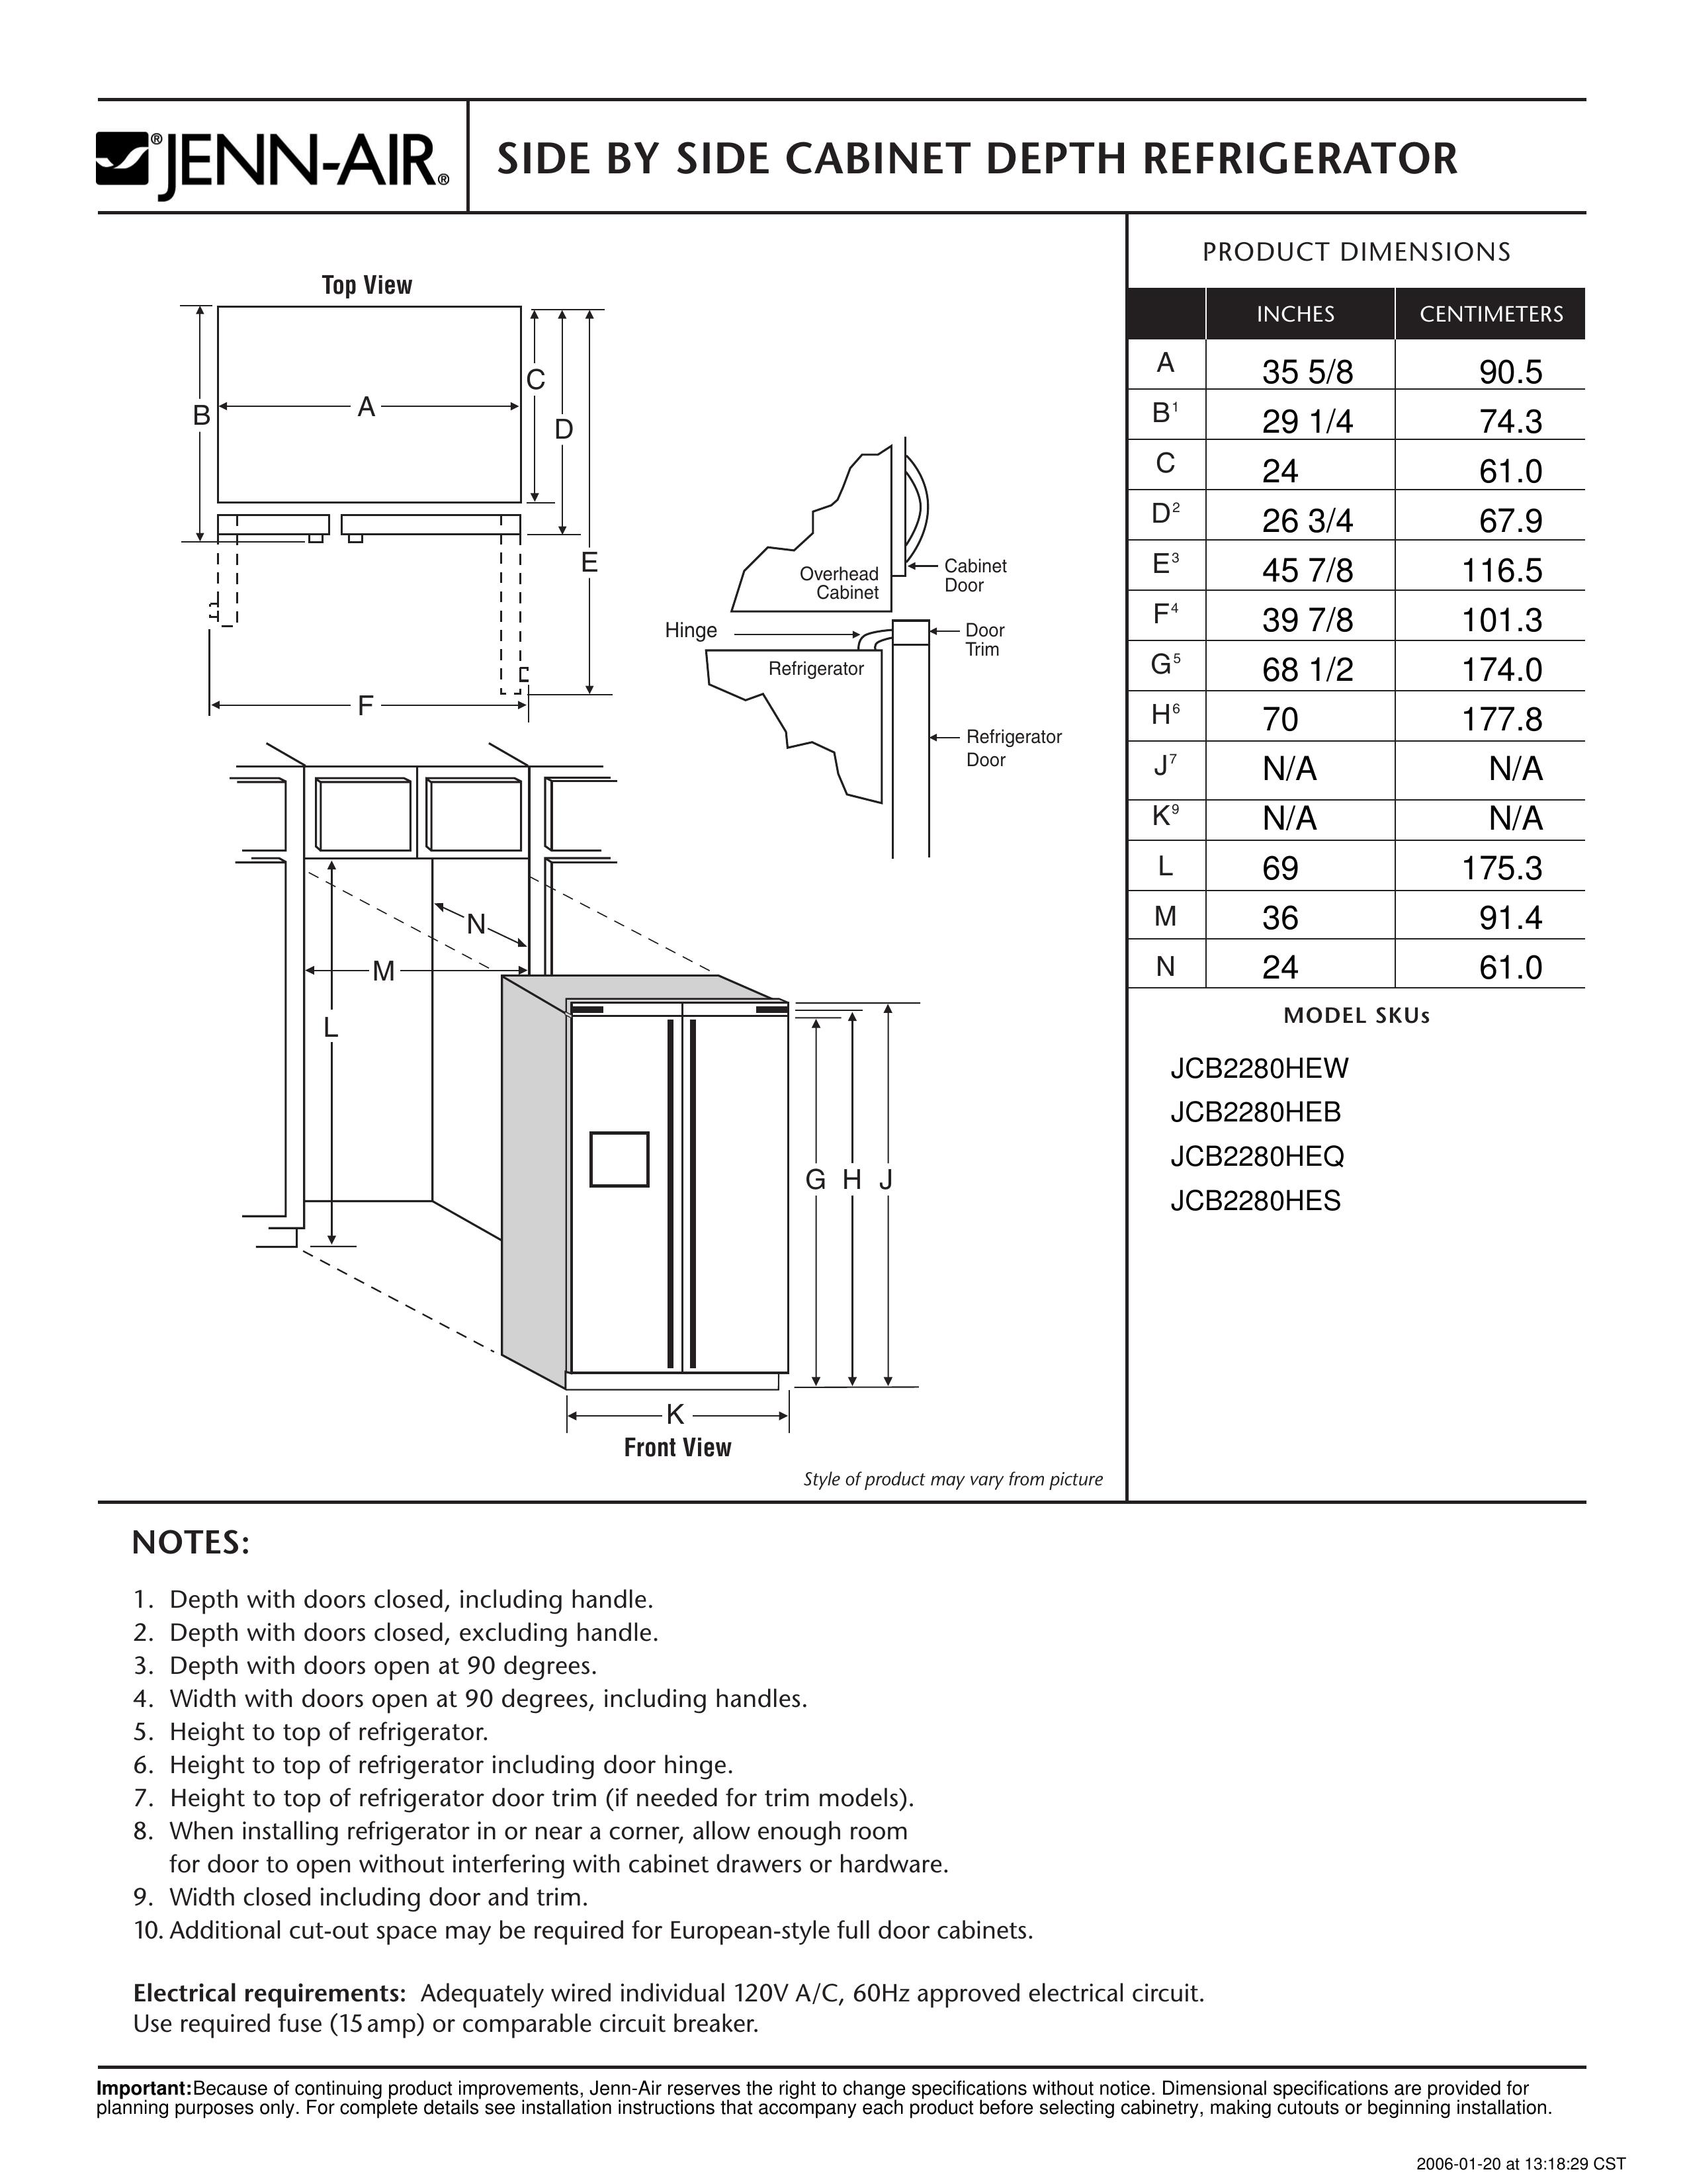 Jenn-Air JCB2280HEW Refrigerator User Manual